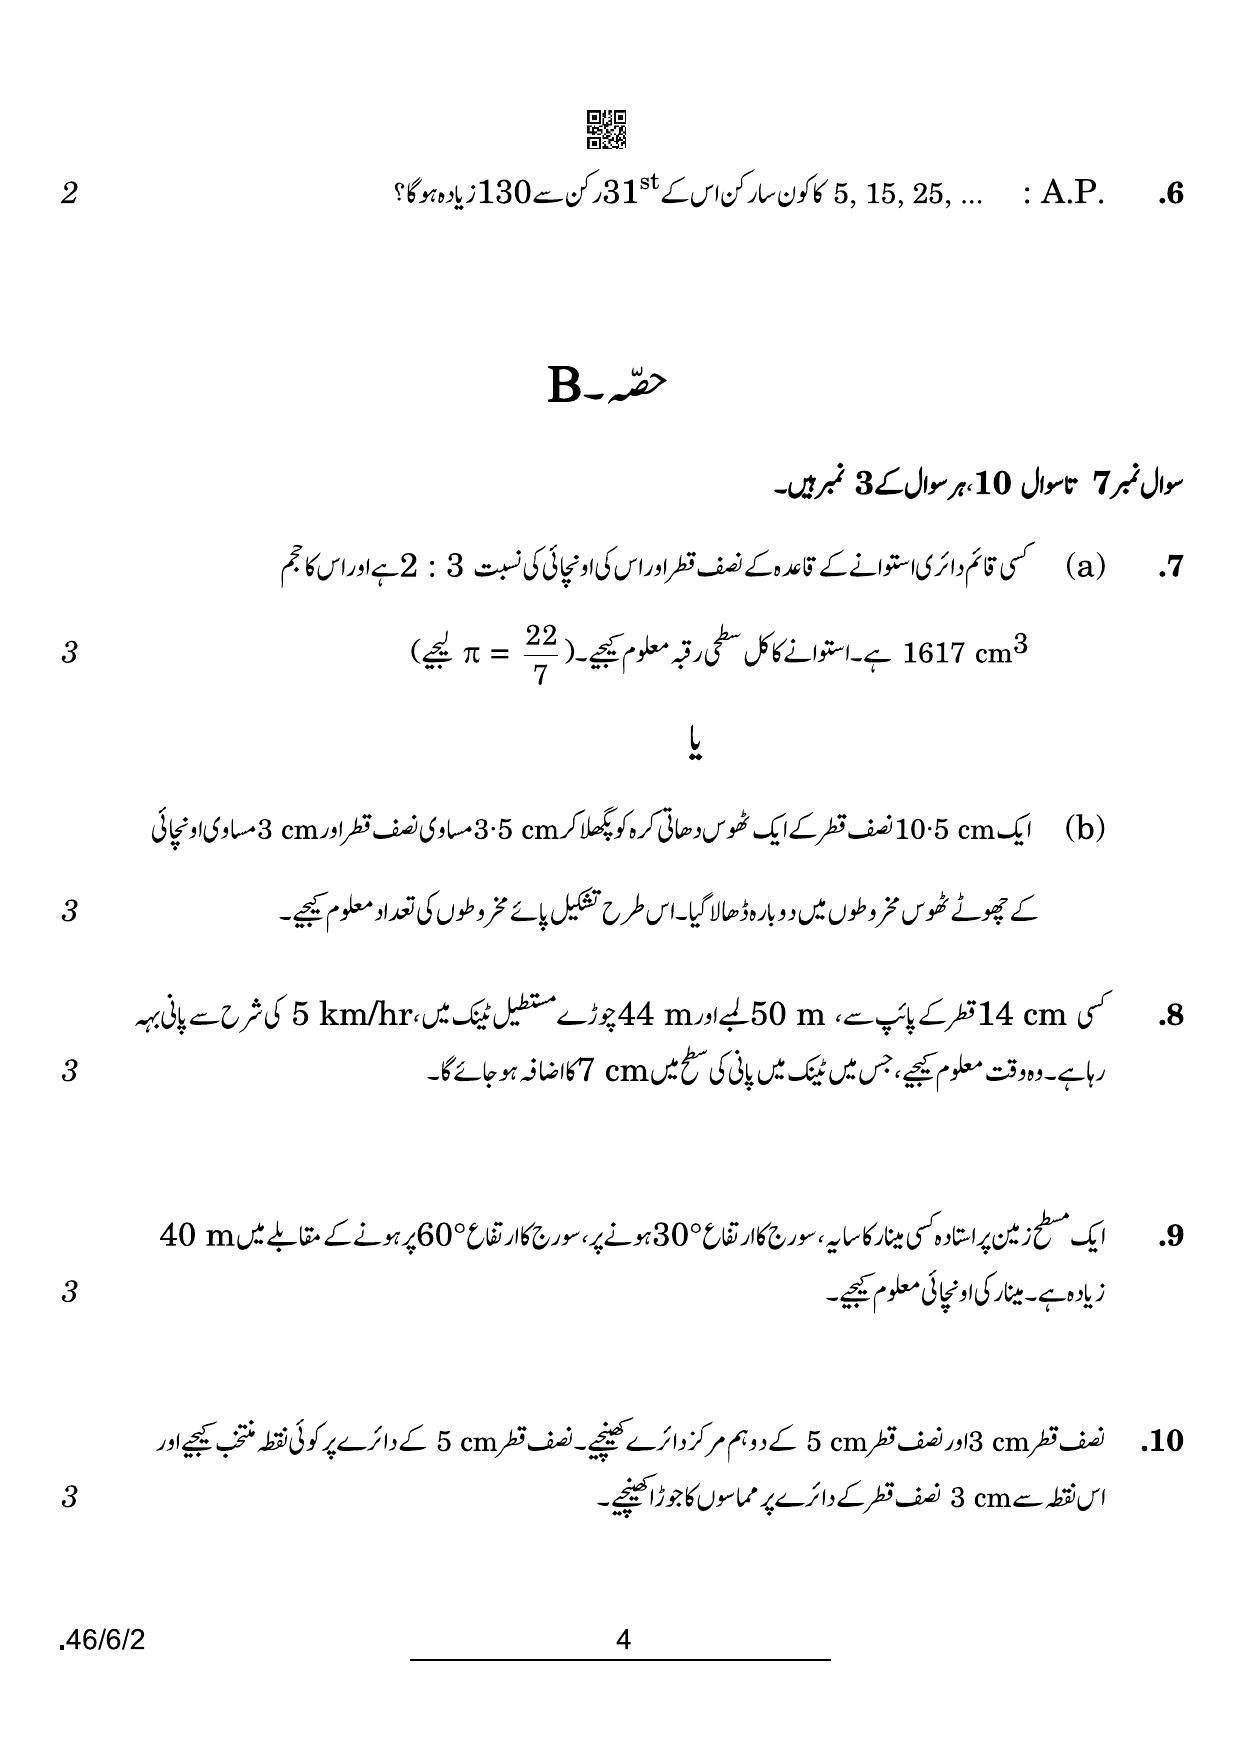 CBSE Class 10 46-6-2 Maths Standard Urdu 2022 Compartment Question Paper - Page 4